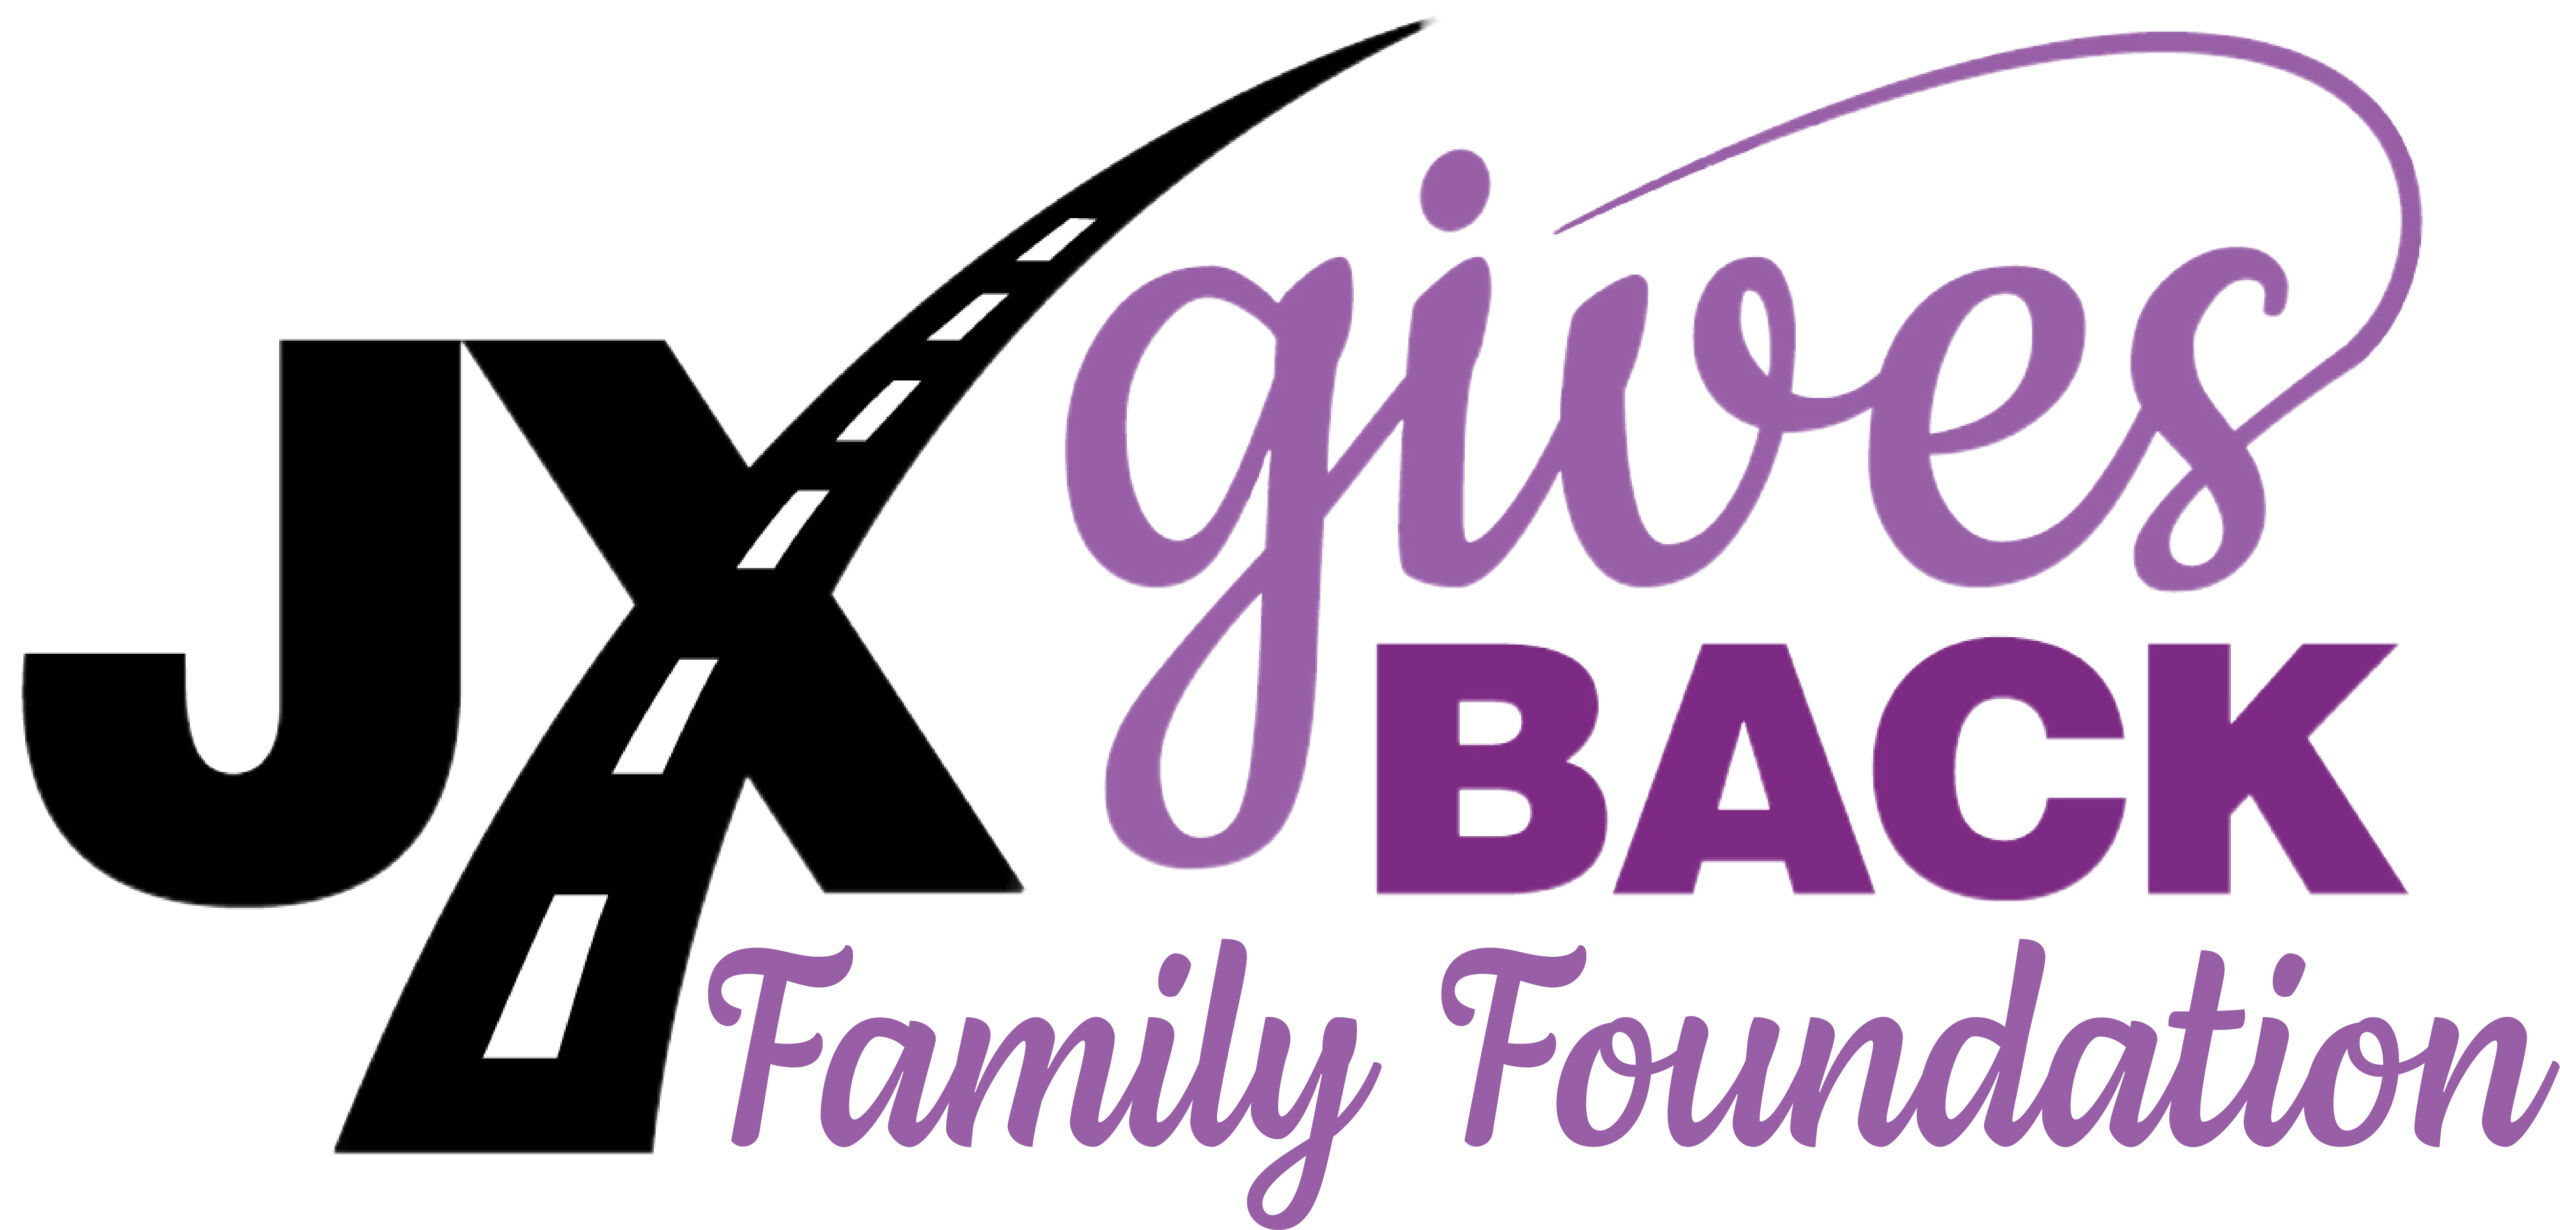 JX Gives Back Family Foundation Logo